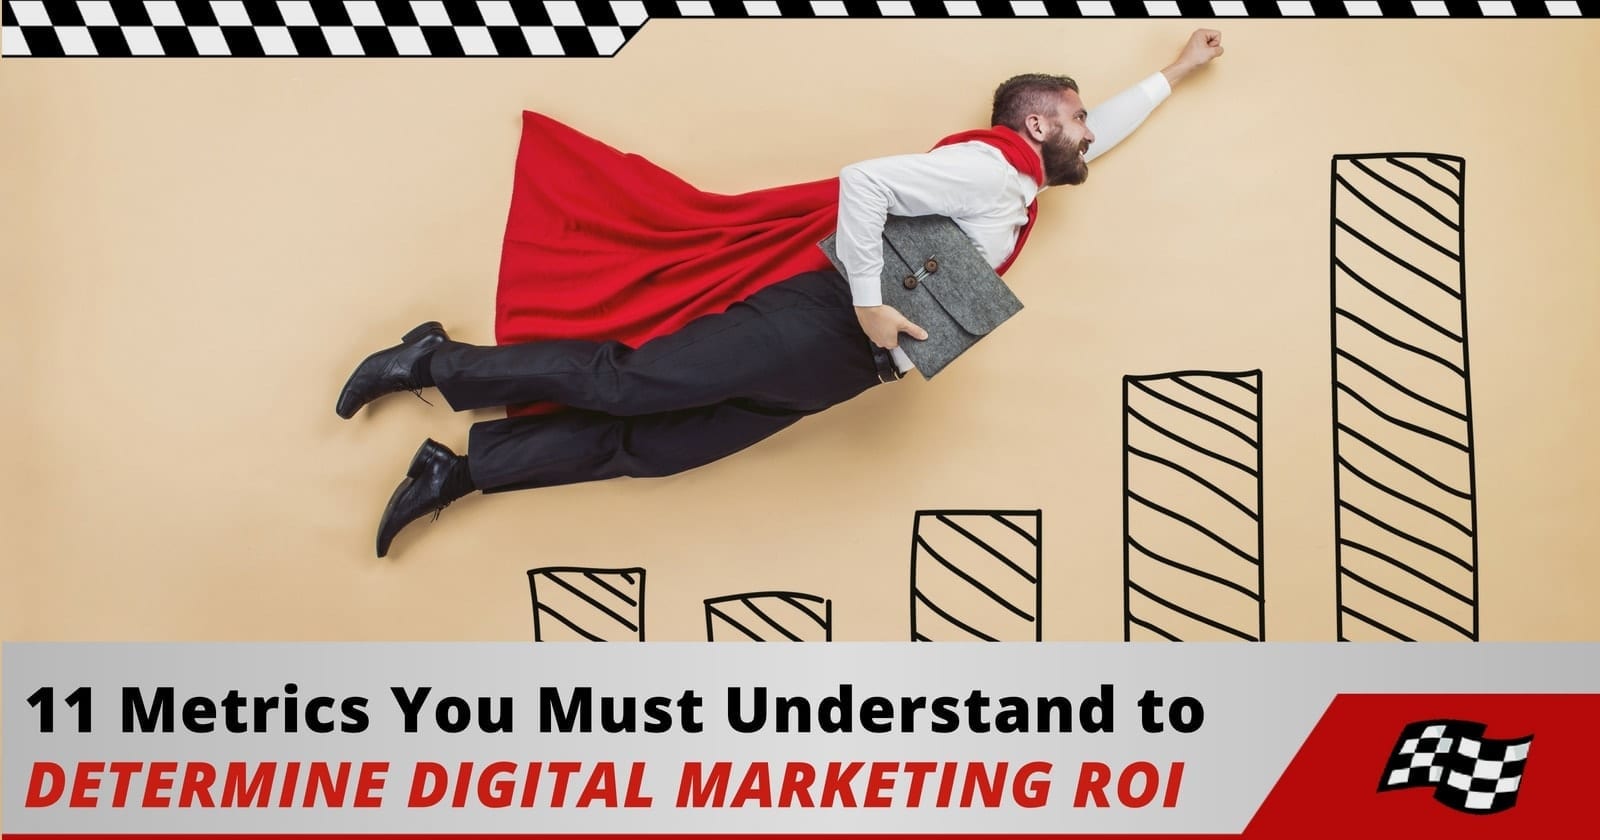 metrics-for-measuring-digital-marketing-roi.jpg